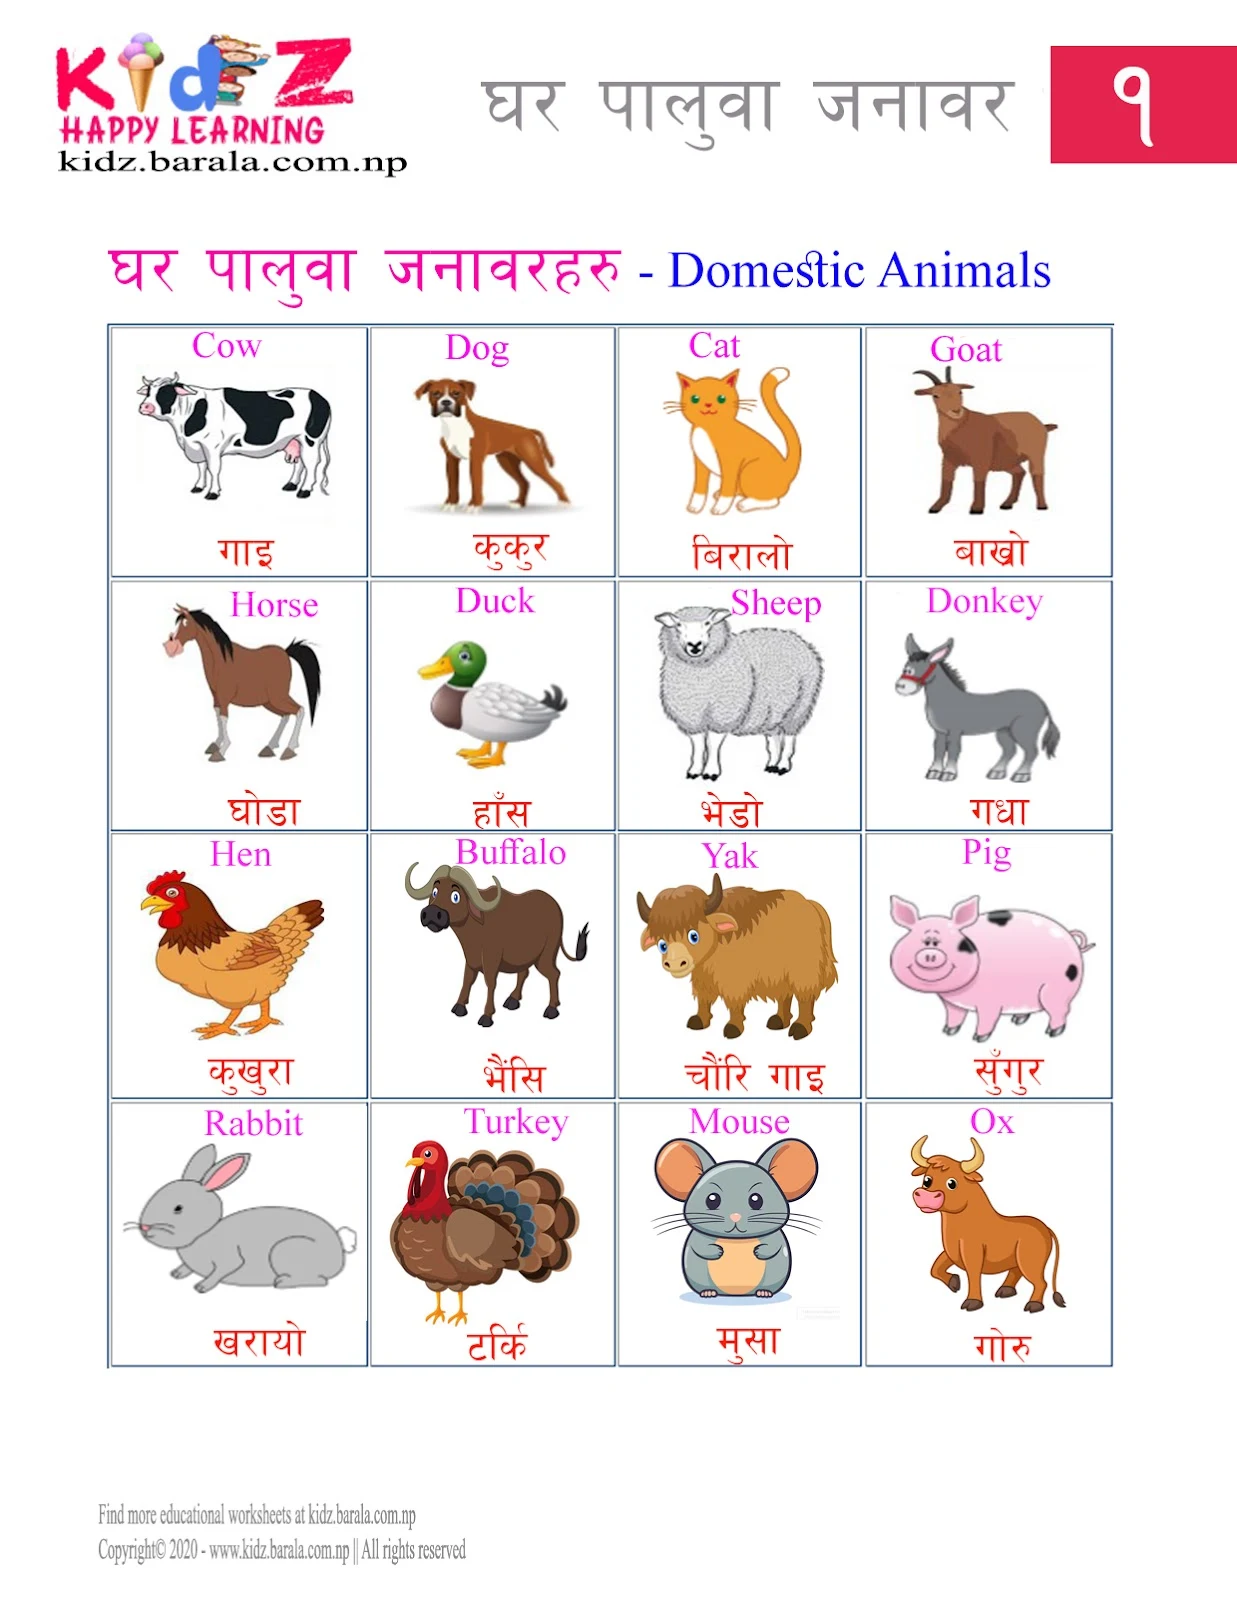 Domestic Animals घरपालुवा जनावर  in Nepali and English list free download